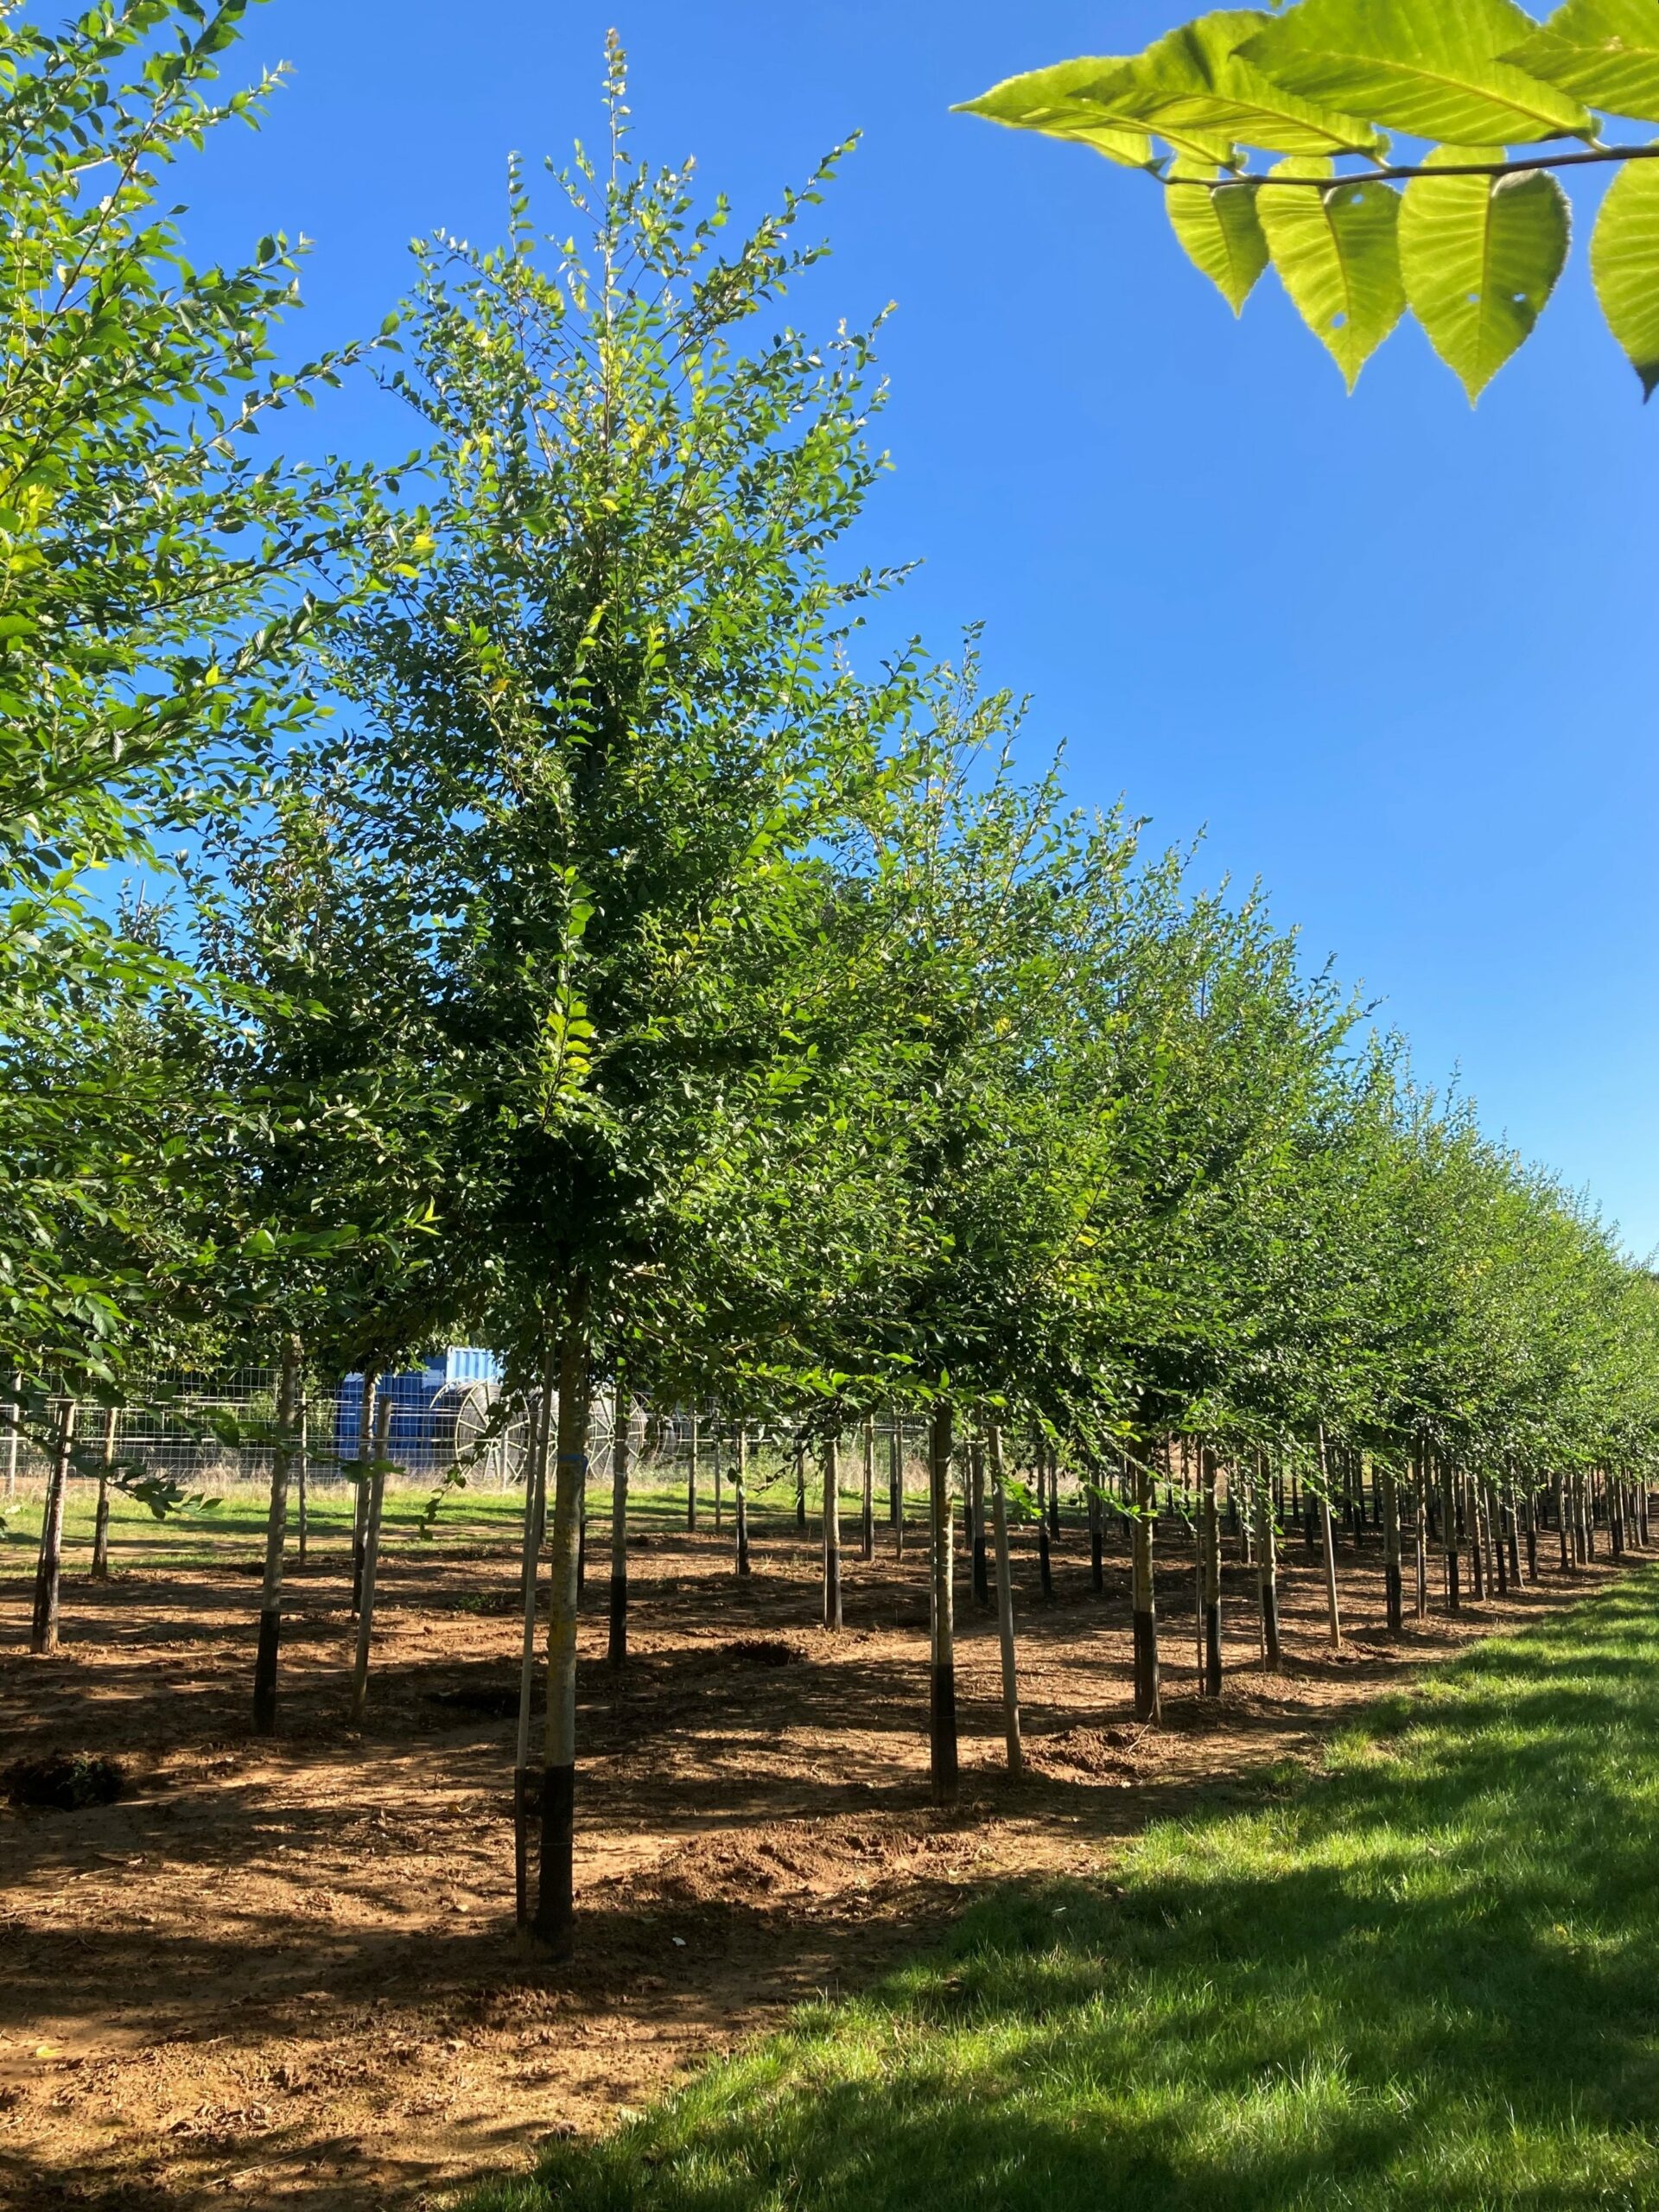 Ulmus fiorente semi mature elm trees growing in rows in field